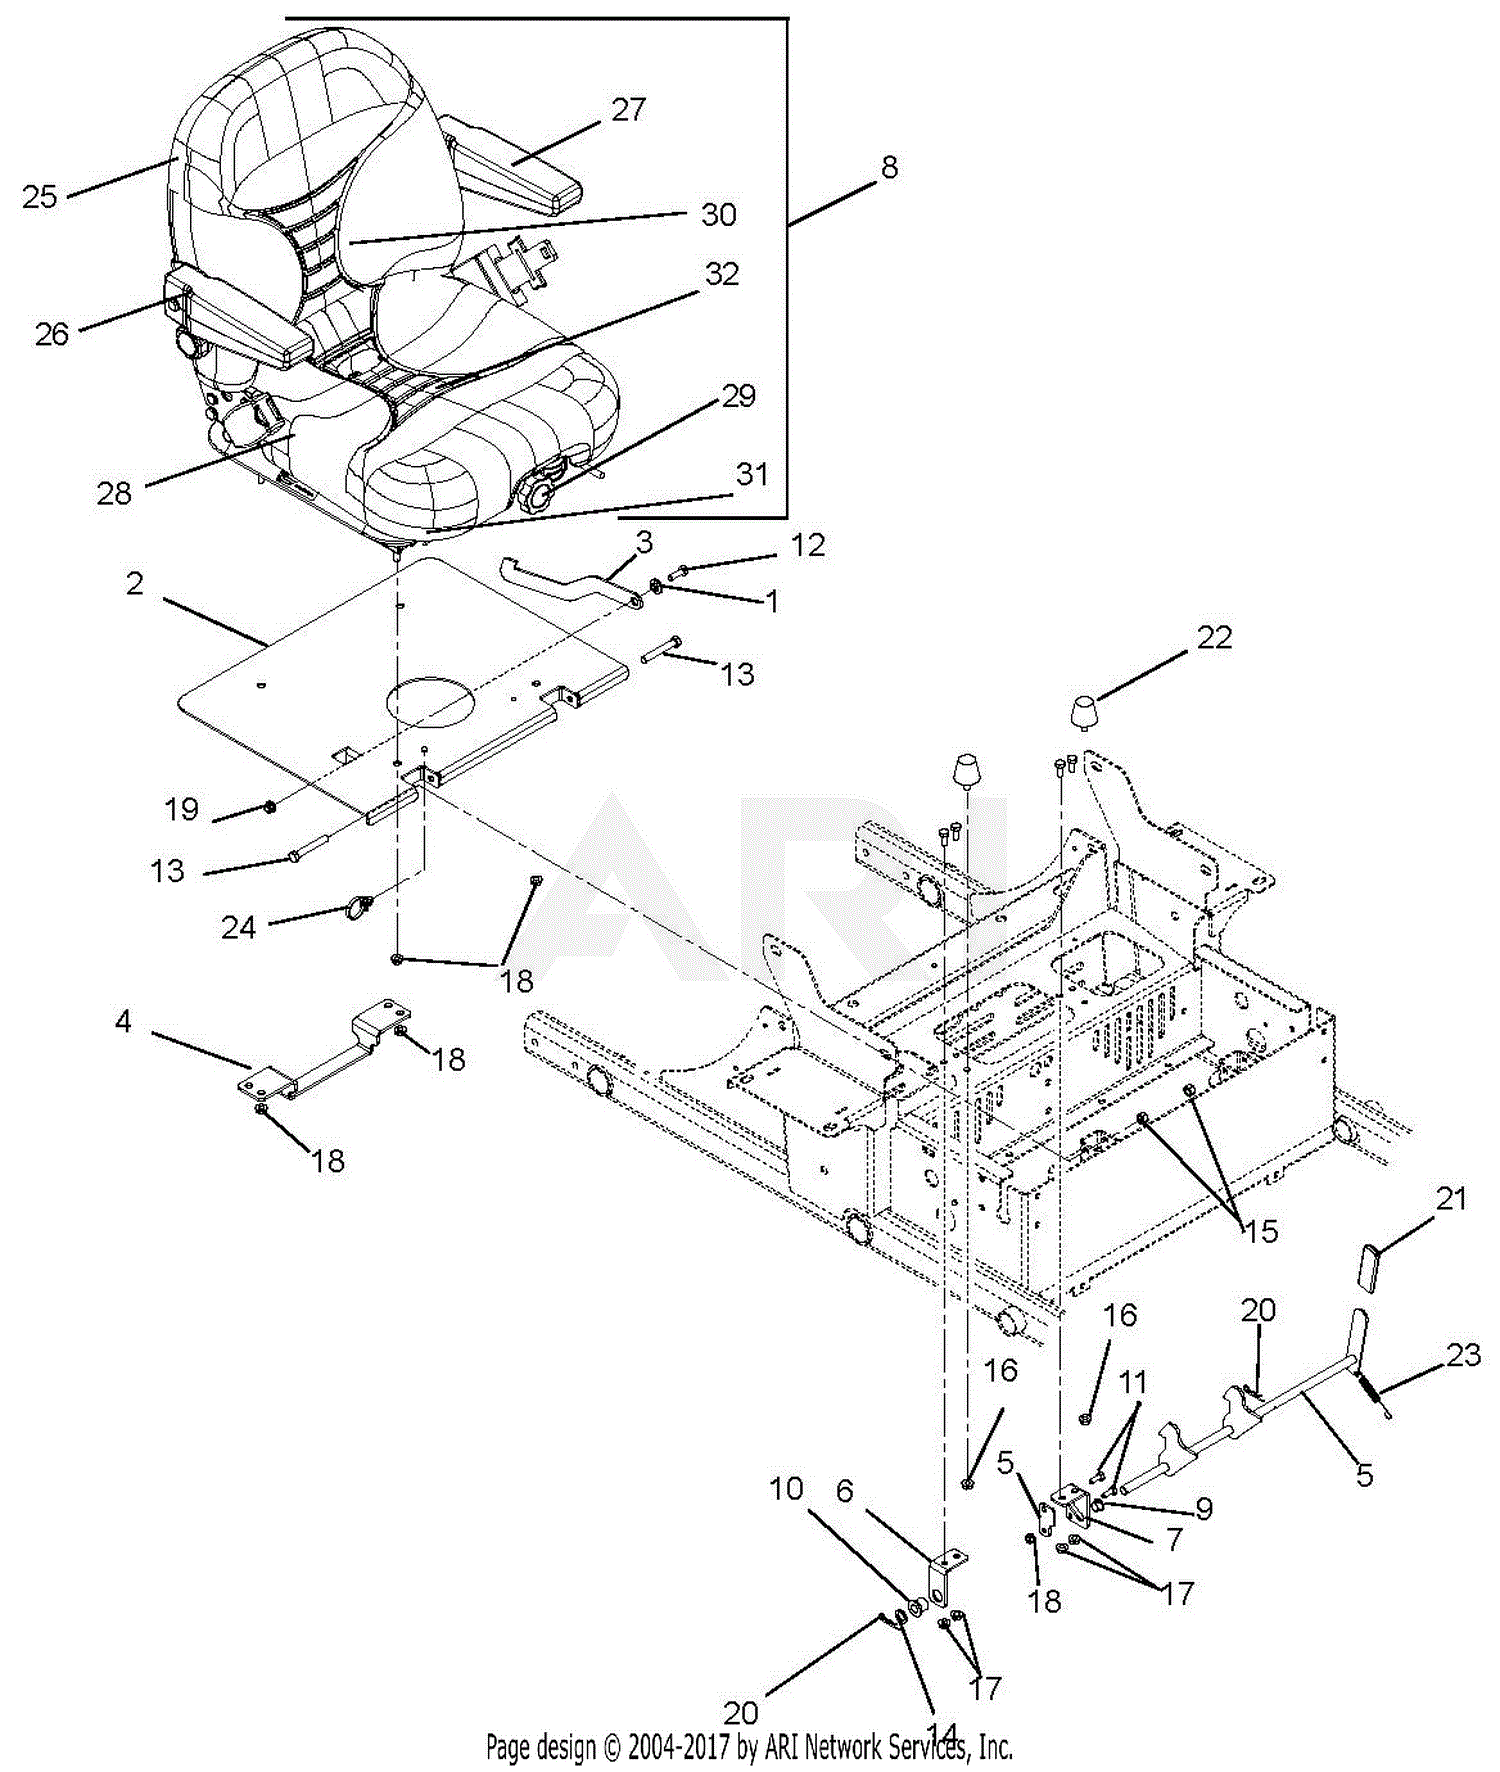 https://az417944.vo.msecnd.net/diagrams/manufacturer/great-dane/zero-turn-lawn-mowers/pro-turn-200/992200-000101-019999-pro-turn-252/seat/diagram.gif